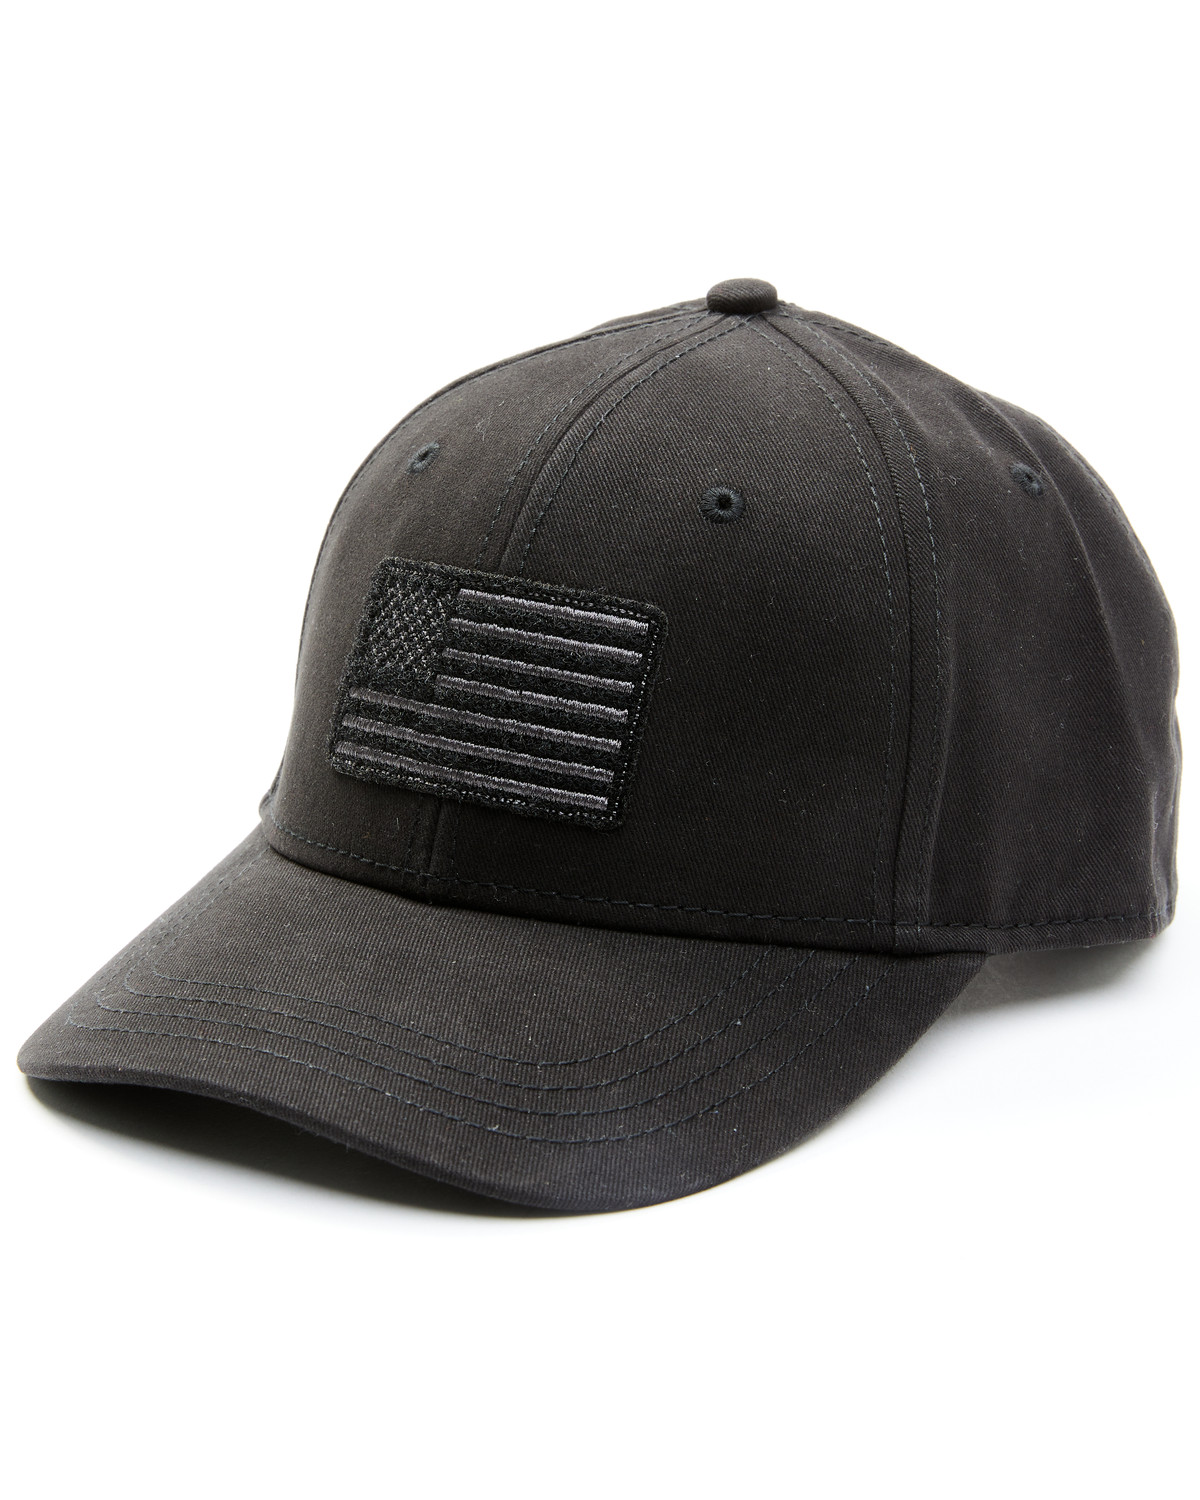 H3 Sportsgear Men's Solid Black American Flag Patch Ball Cap | Sheplers